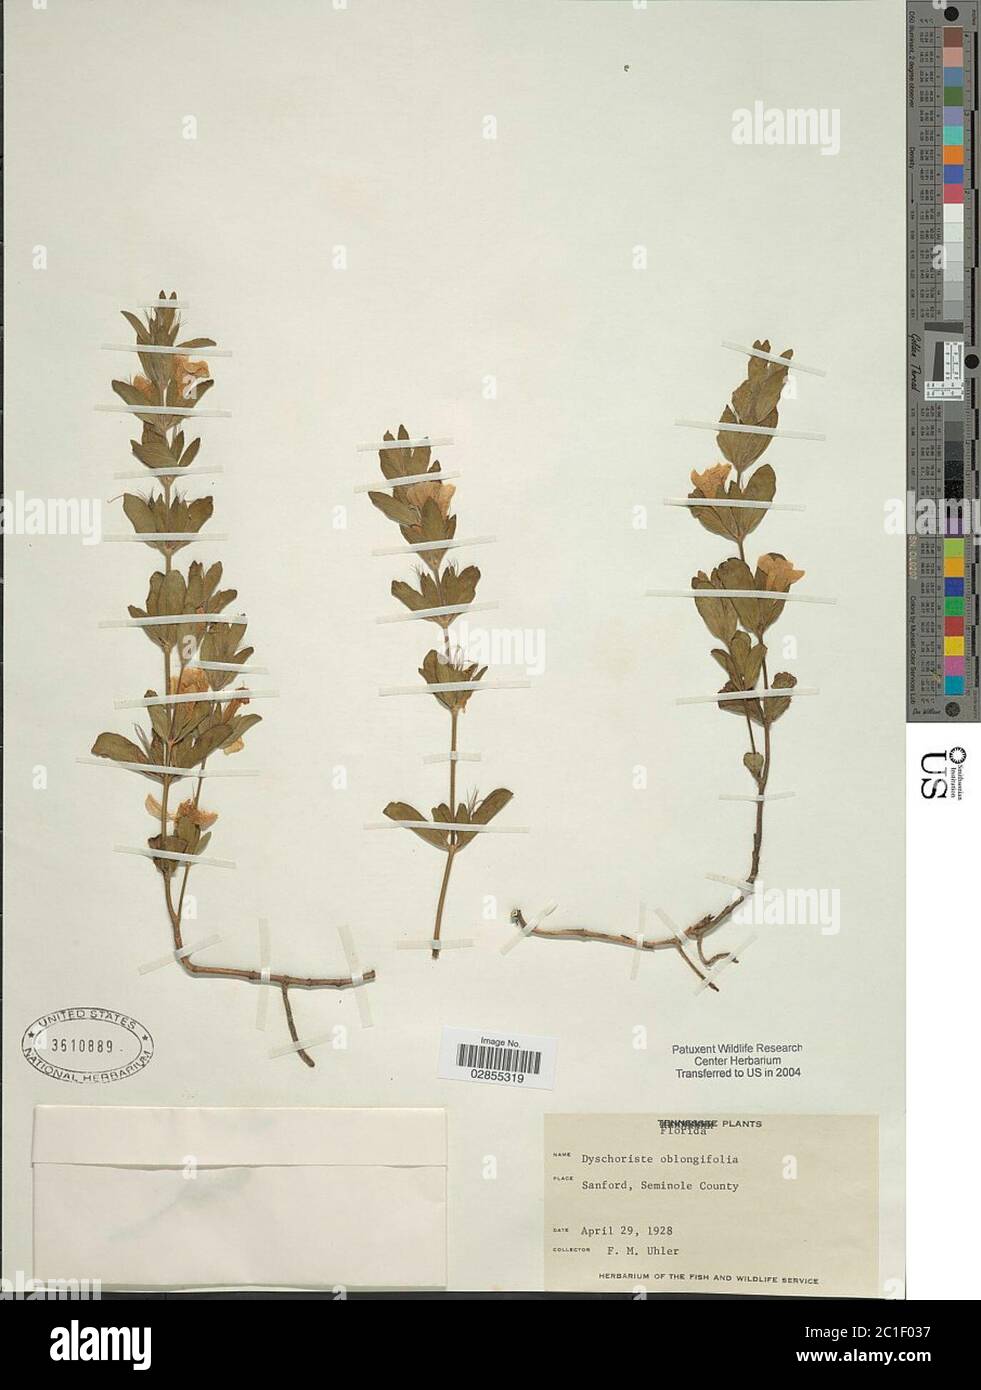 Dyschoriste oblongifolia Michx Kuntze Dyschoriste oblongifolia Michx Kuntze. Stock Photo